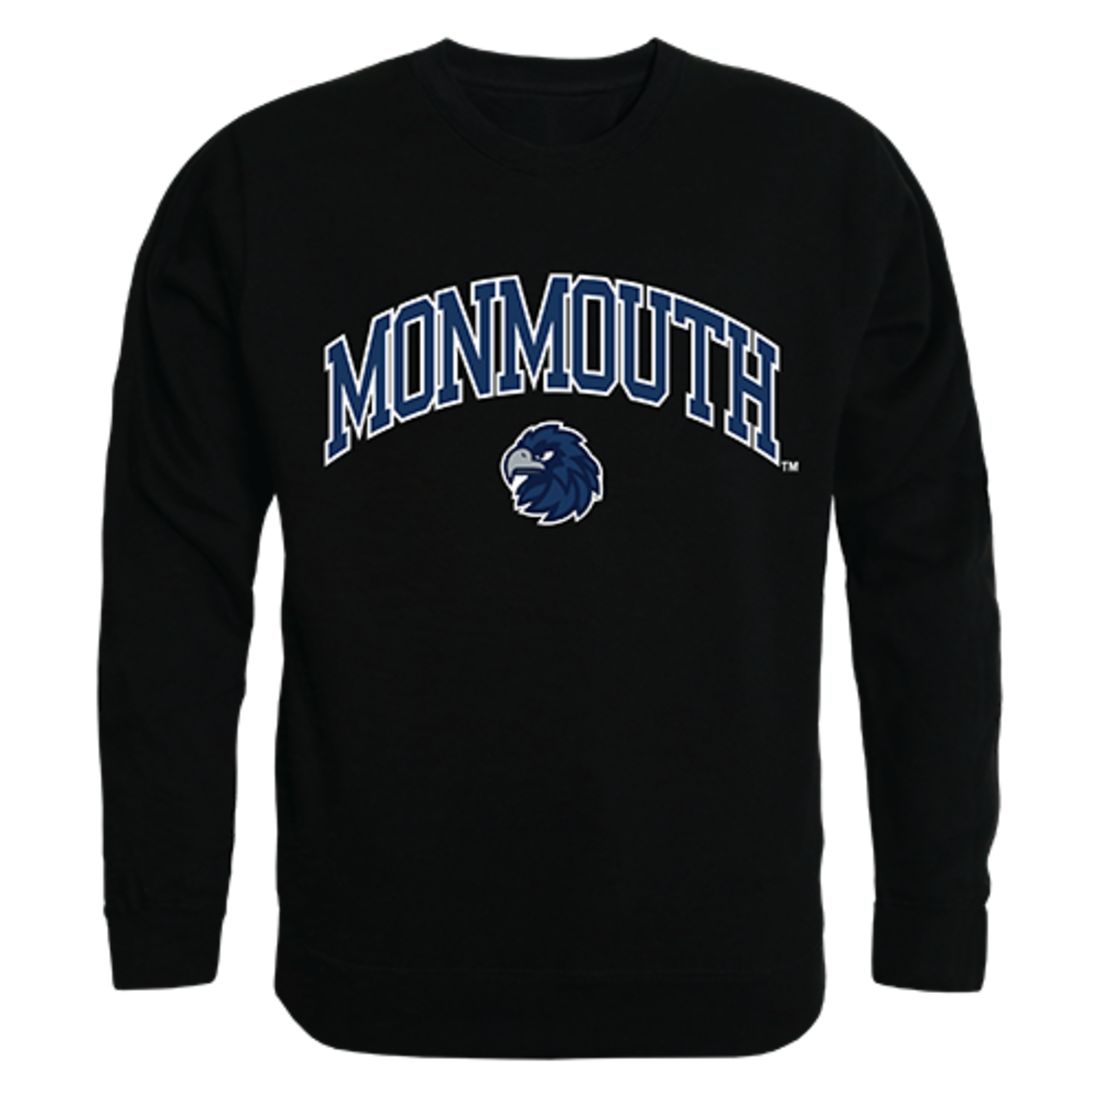 Monmouth University Campus Crewneck Pullover Sweatshirt Sweater Black-Campus-Wardrobe